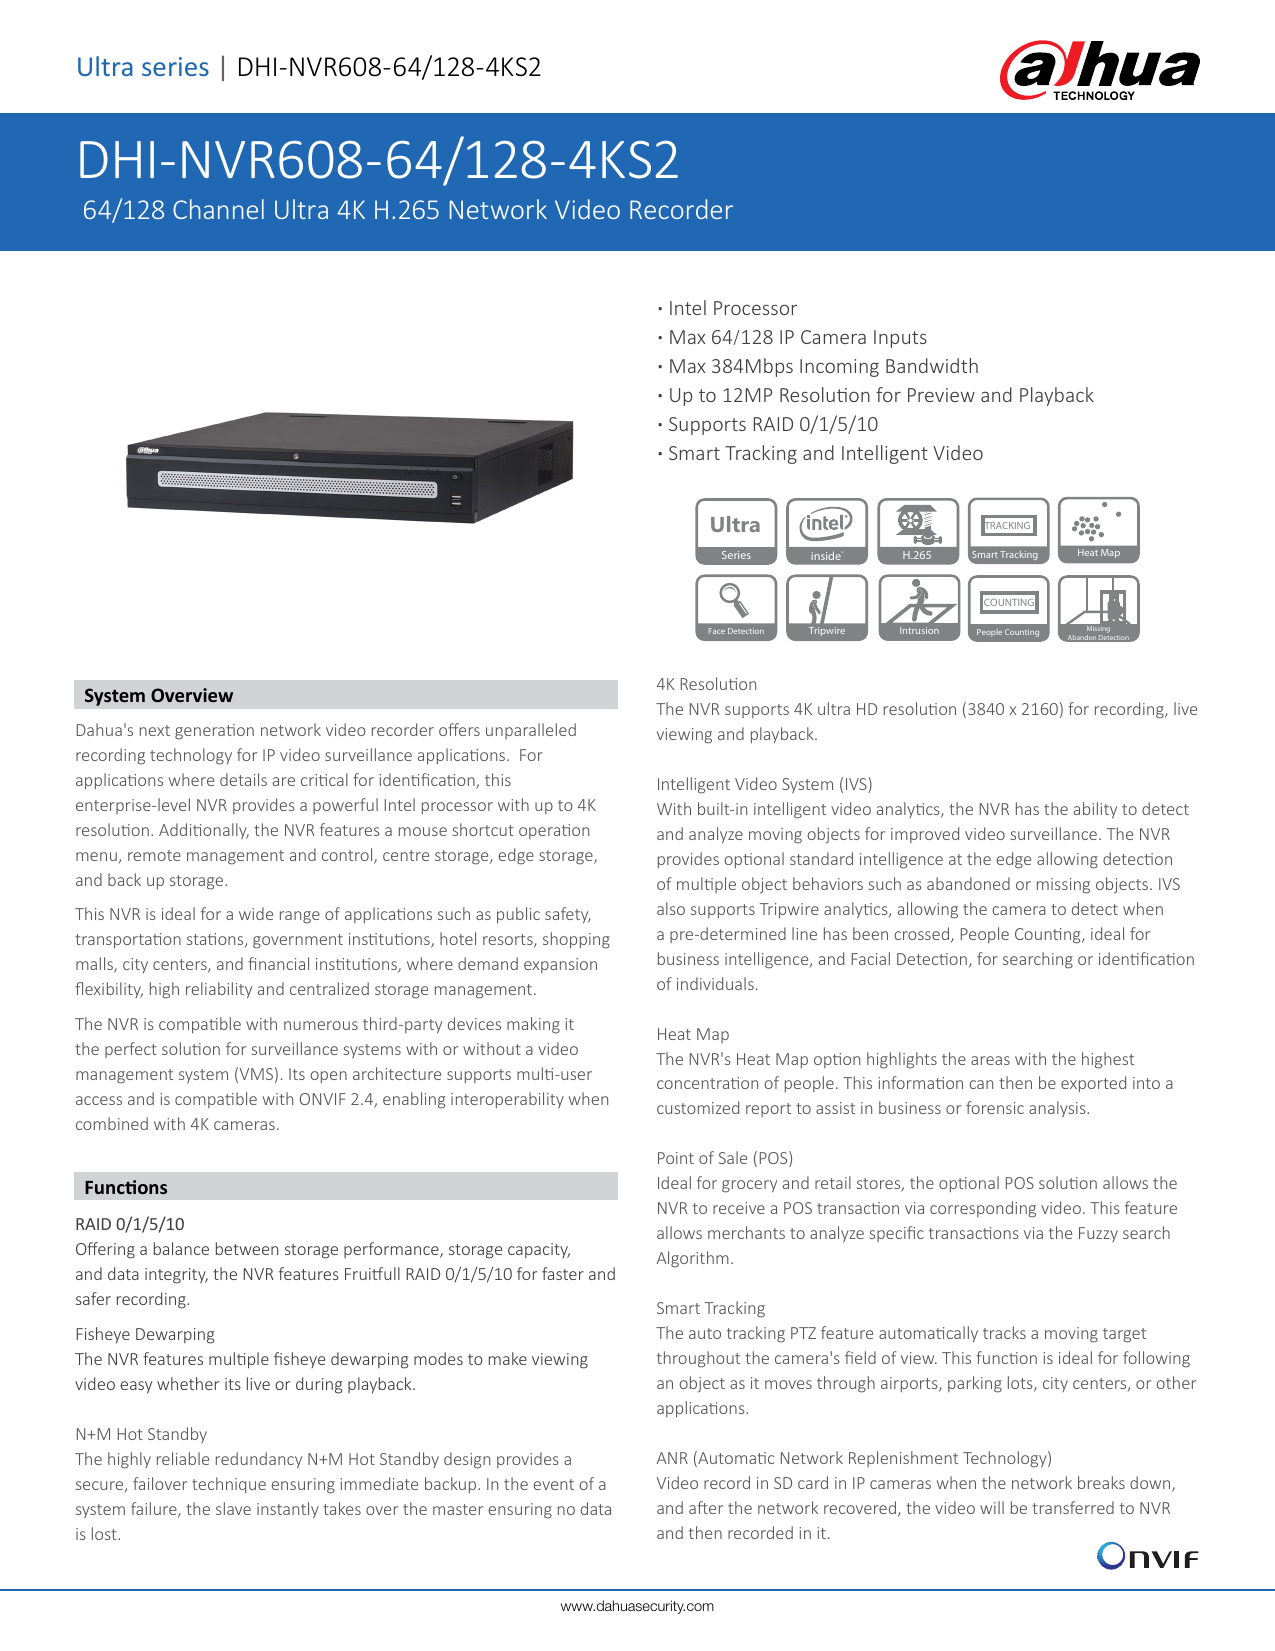 DAHUA DHI-NVR608-64-4KS2-0TB Network Video Recorder Data Sheet | Manualzz